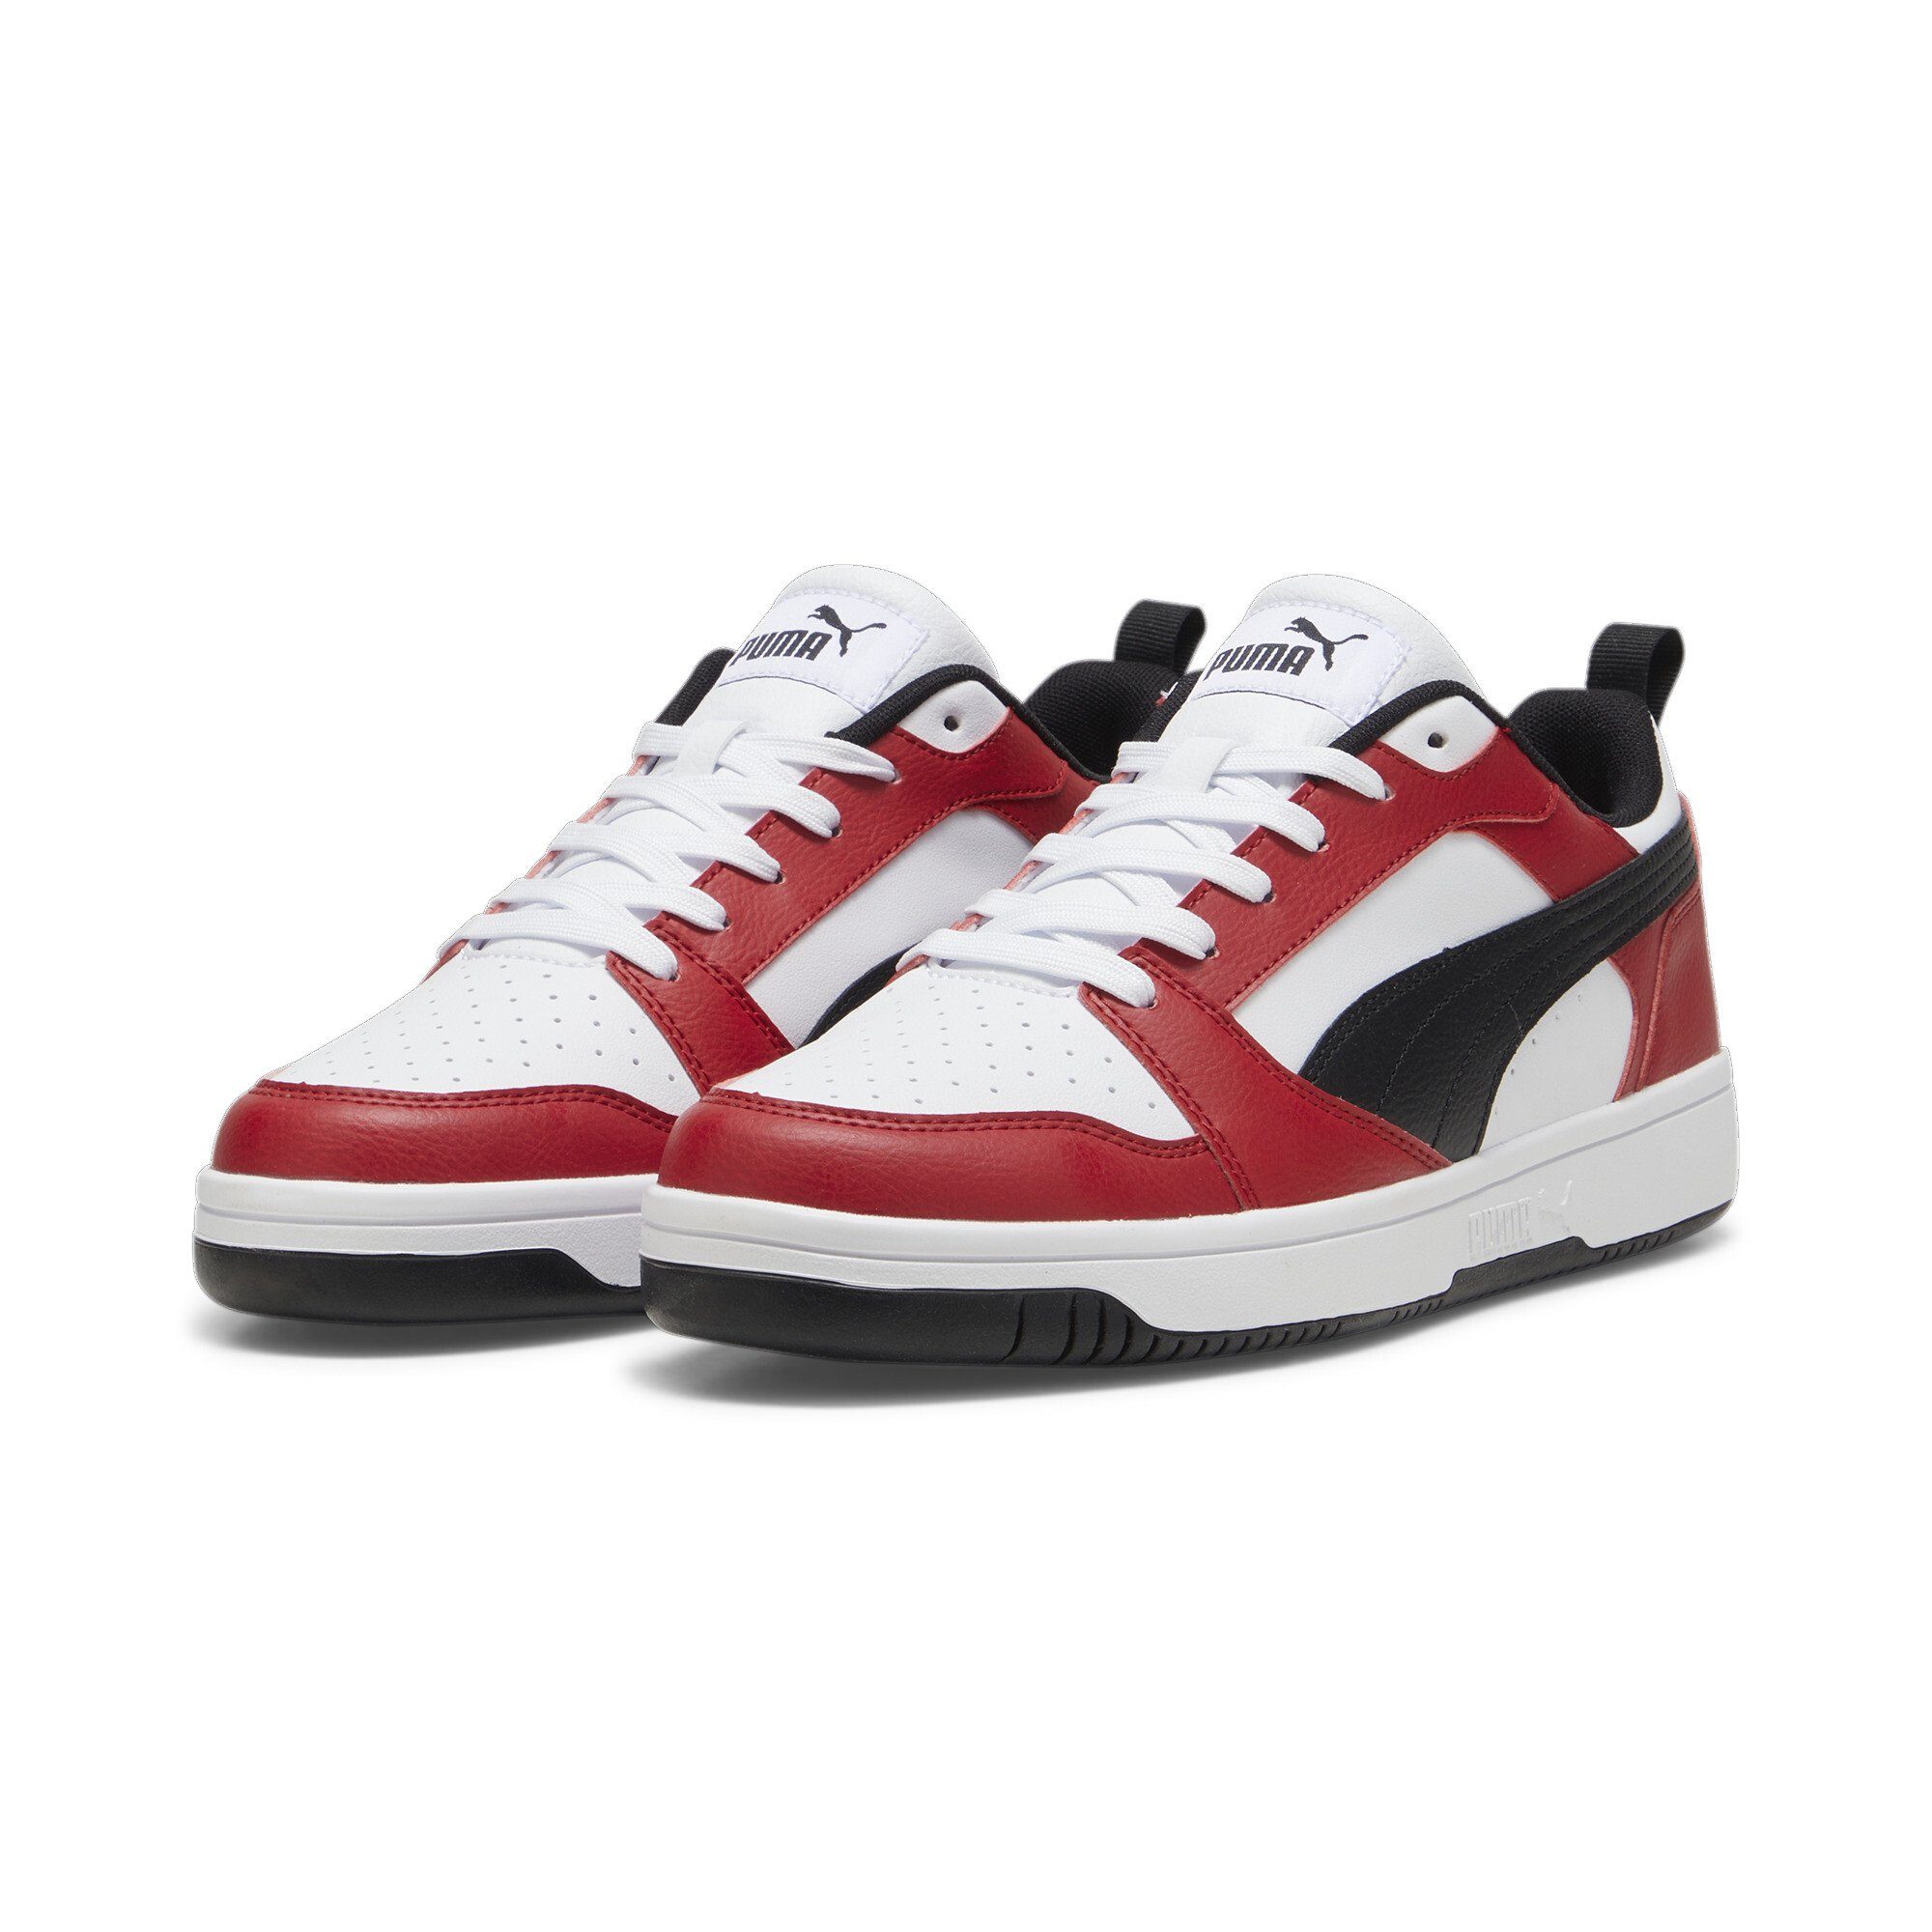 PUMA Rebound V6 Low Sneakers Erwachsene Sneaker White Black Club Red